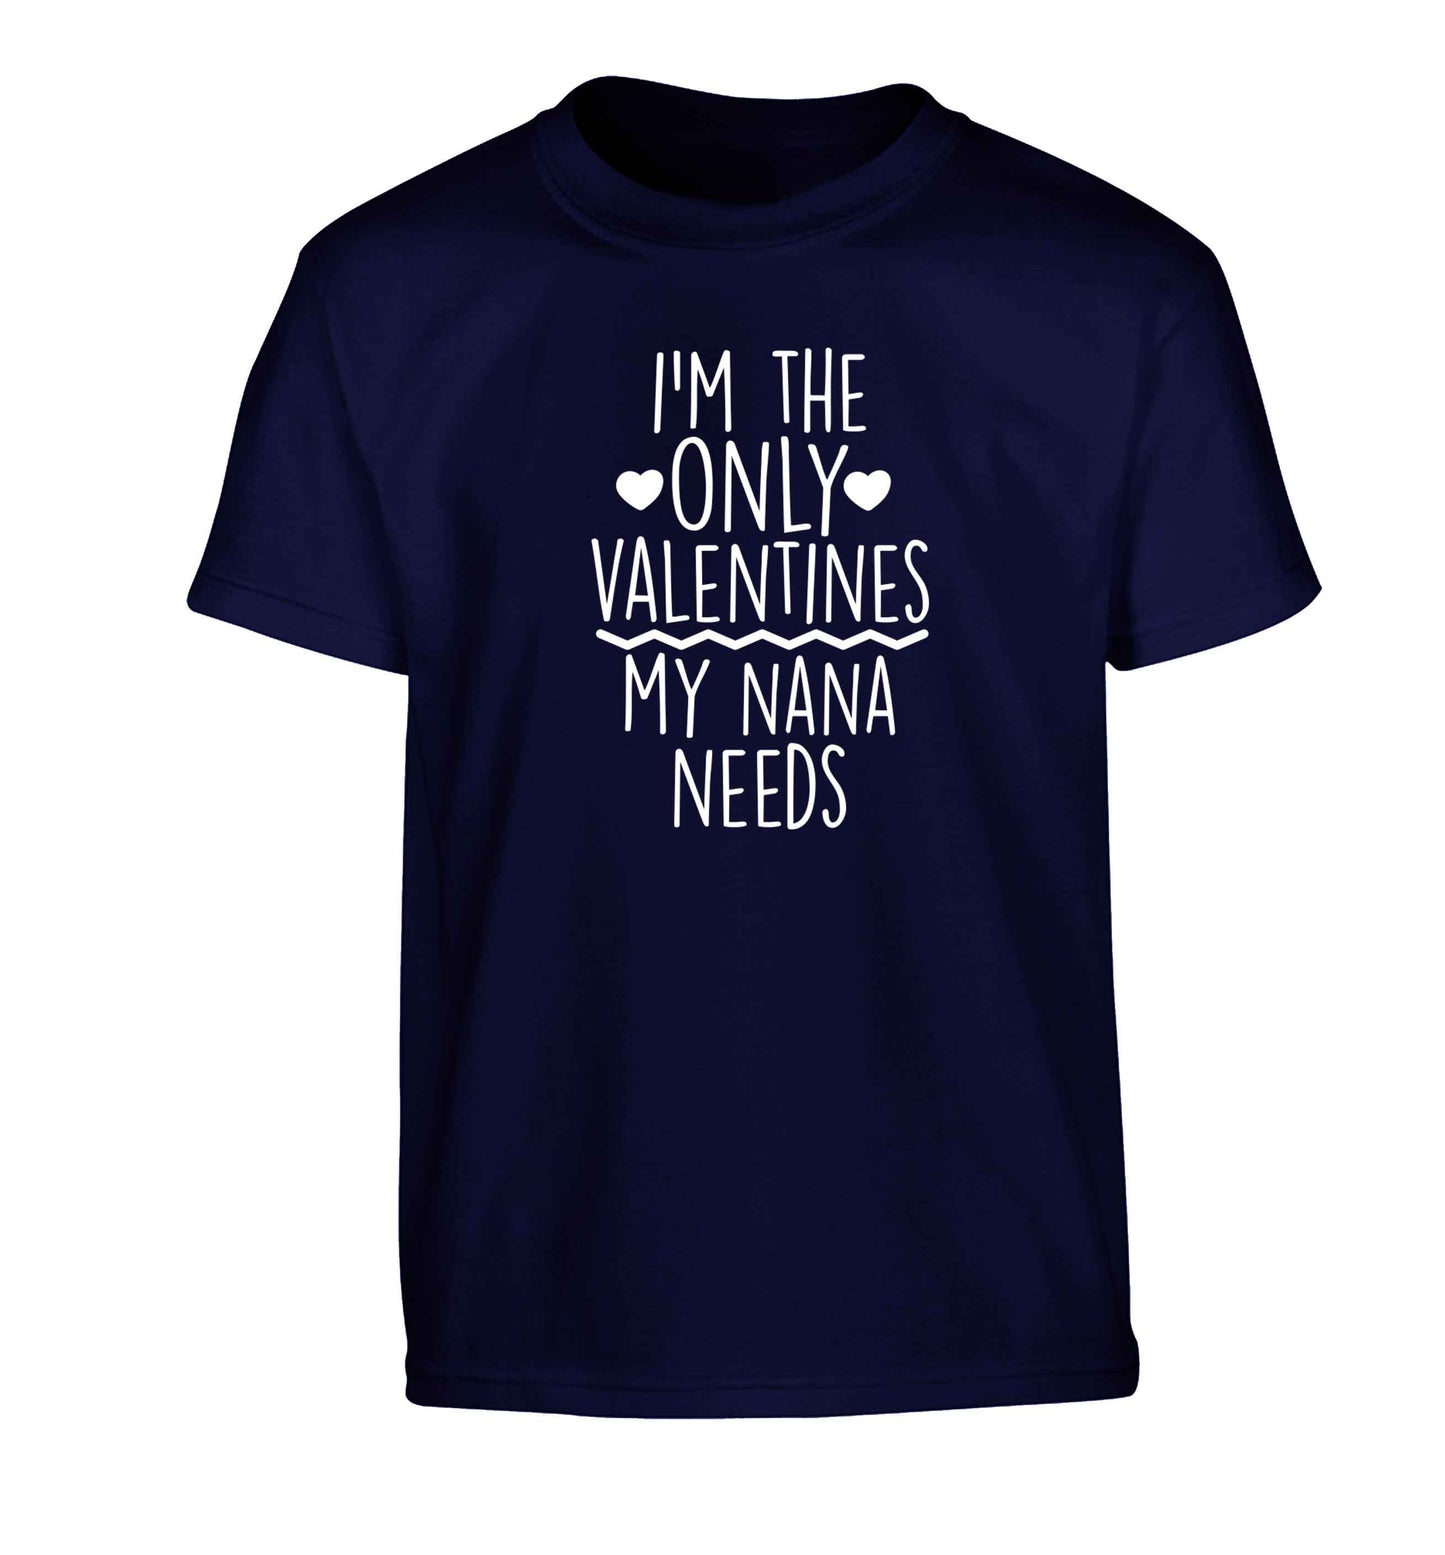 I'm the only valentines my nana needs Children's navy Tshirt 12-13 Years